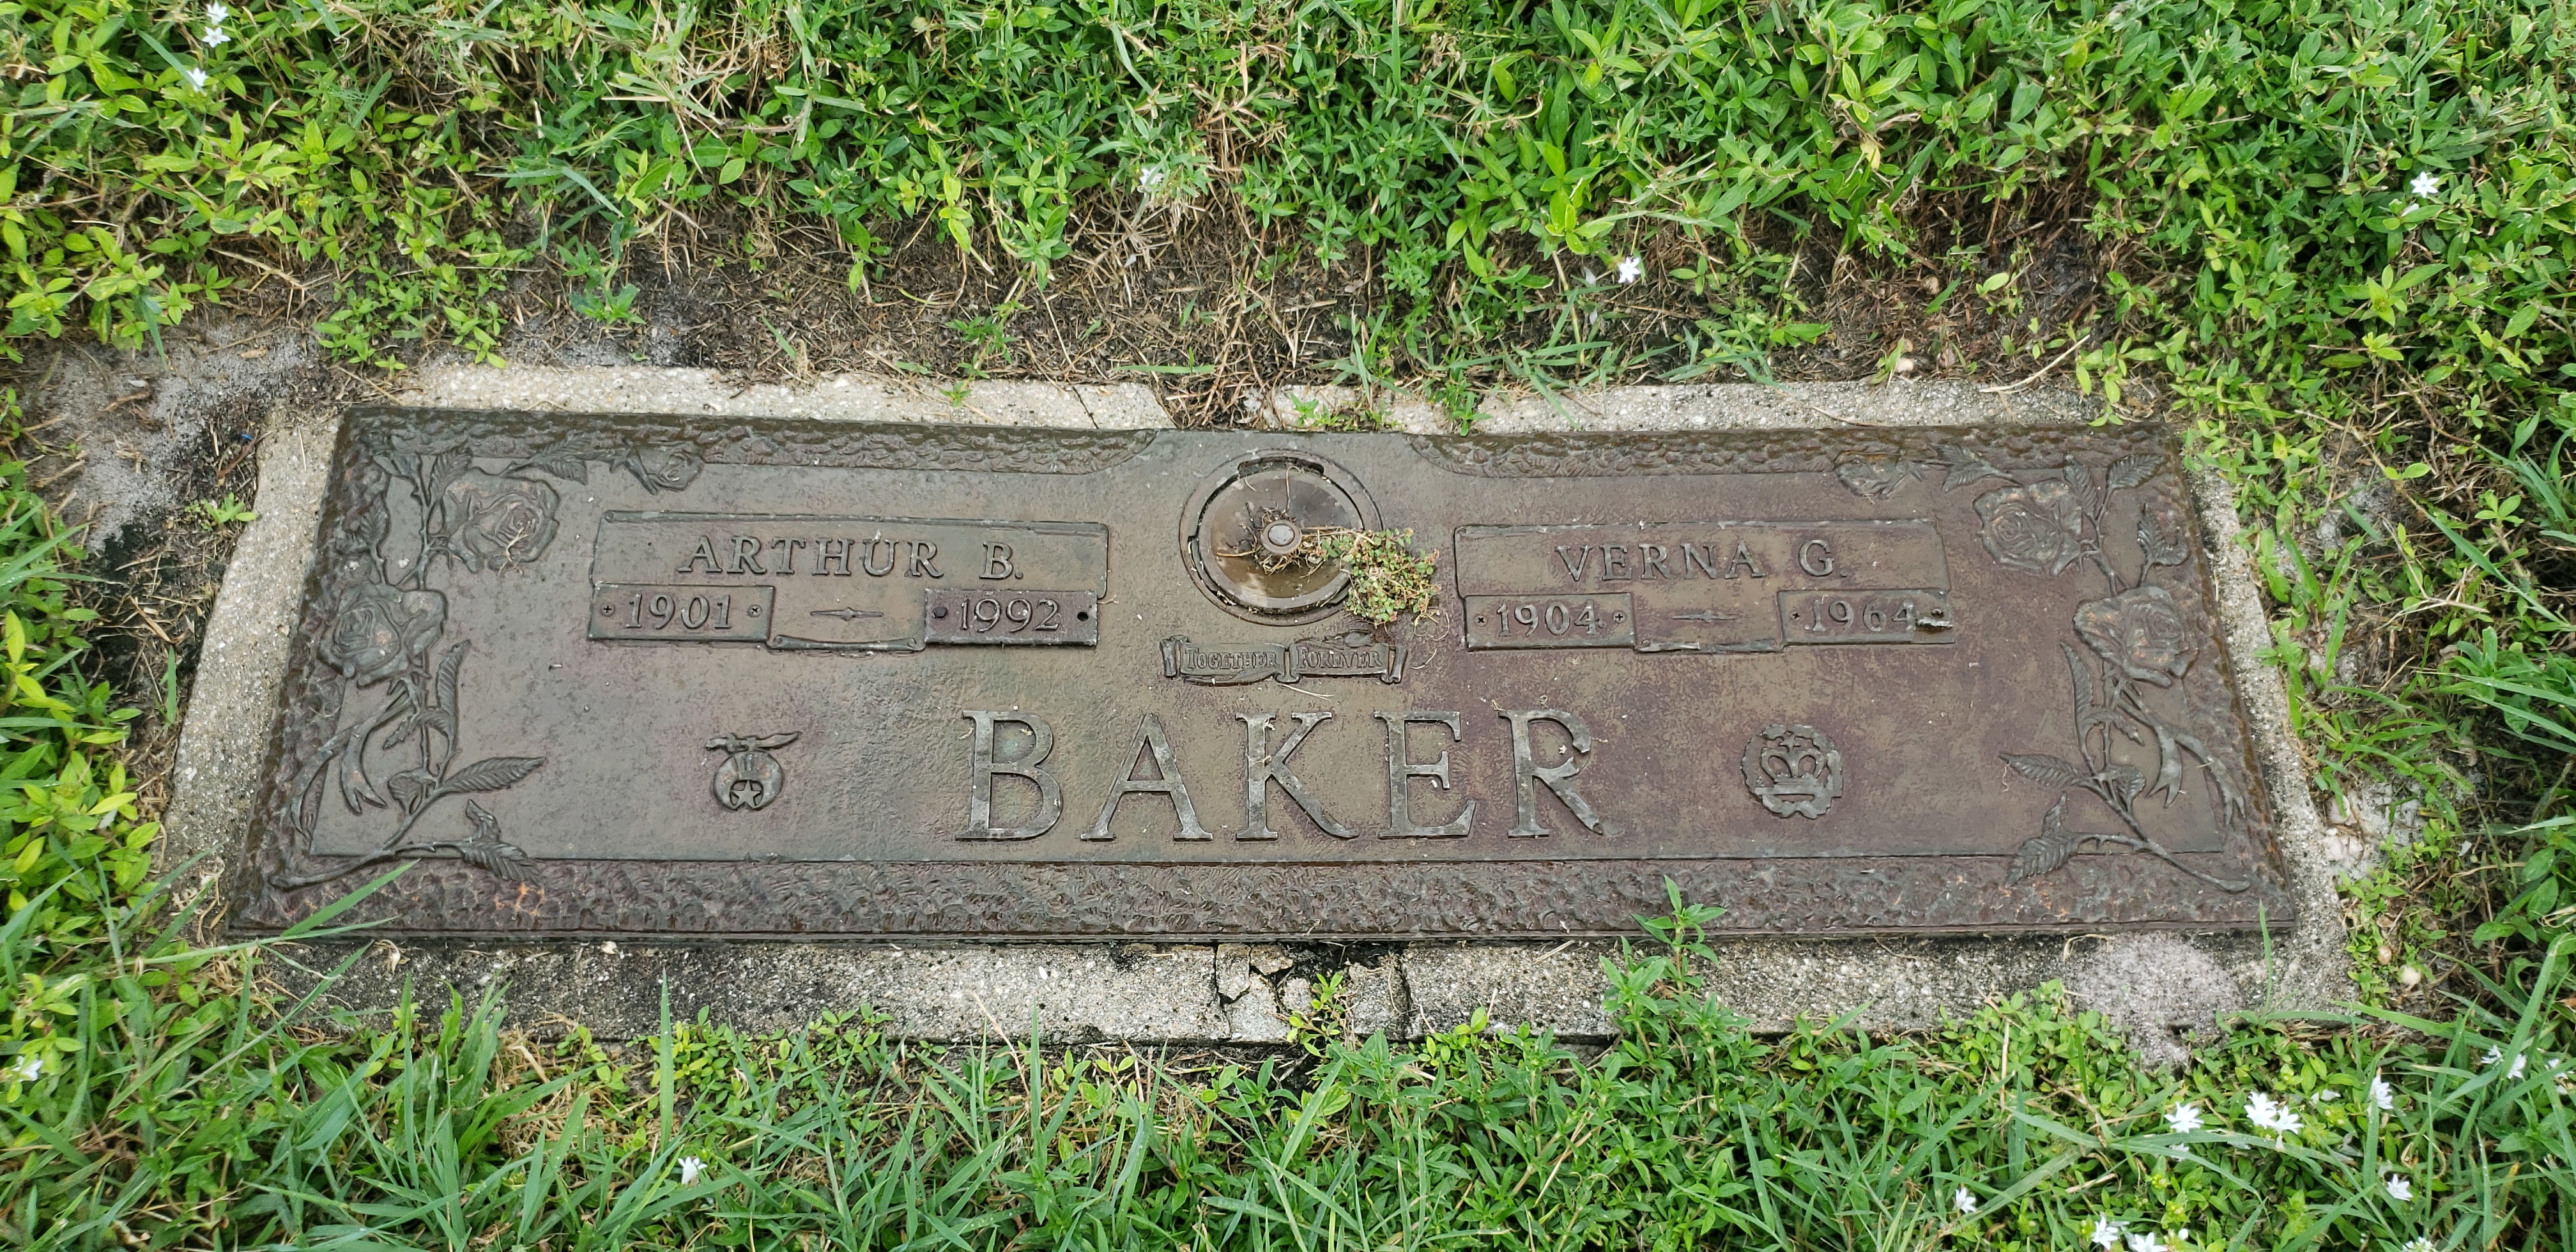 Arthur B Baker